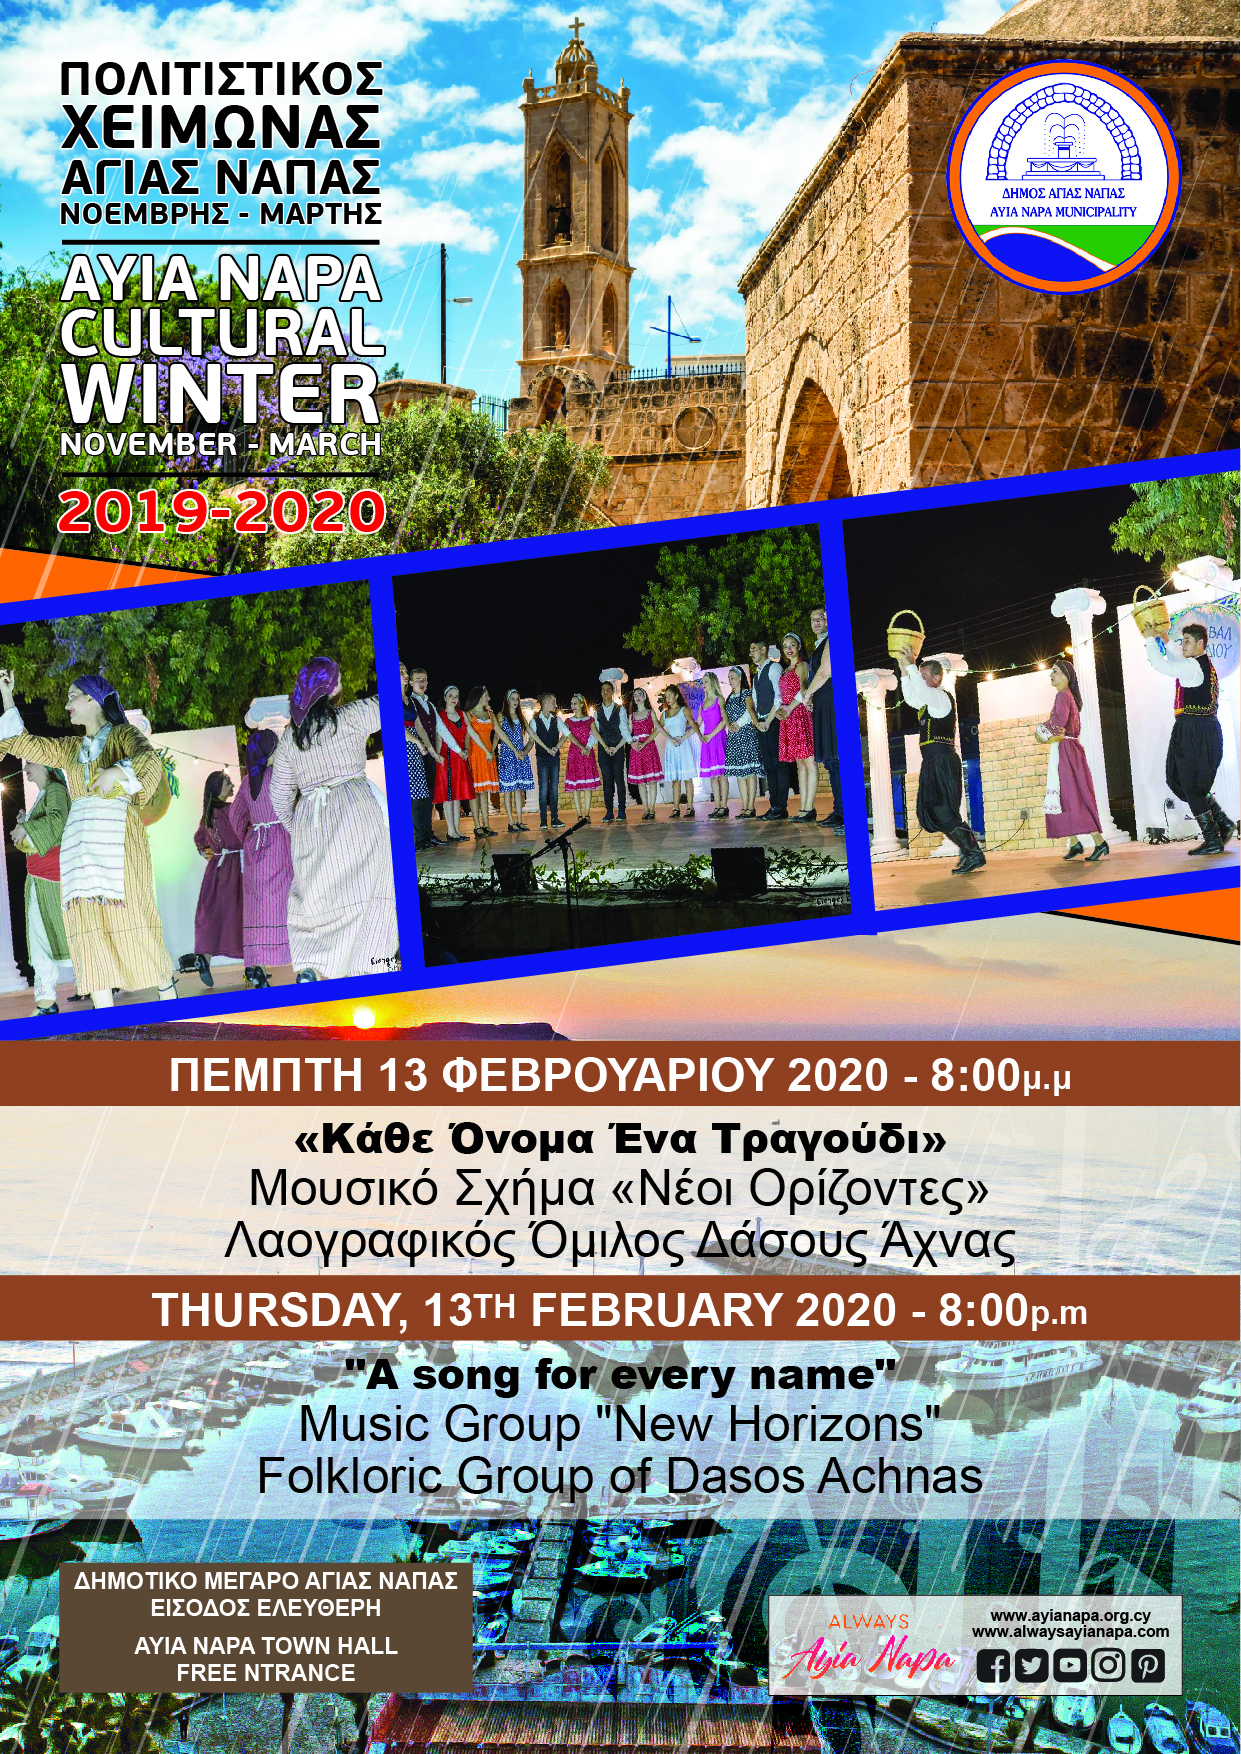 13 february 01 εγχώρια μουσικοχορευτικά σχήματα, Πολιτιστικός Χειμώνας, Πολιτιστικός Χειμώνας Αγίας Νάπας